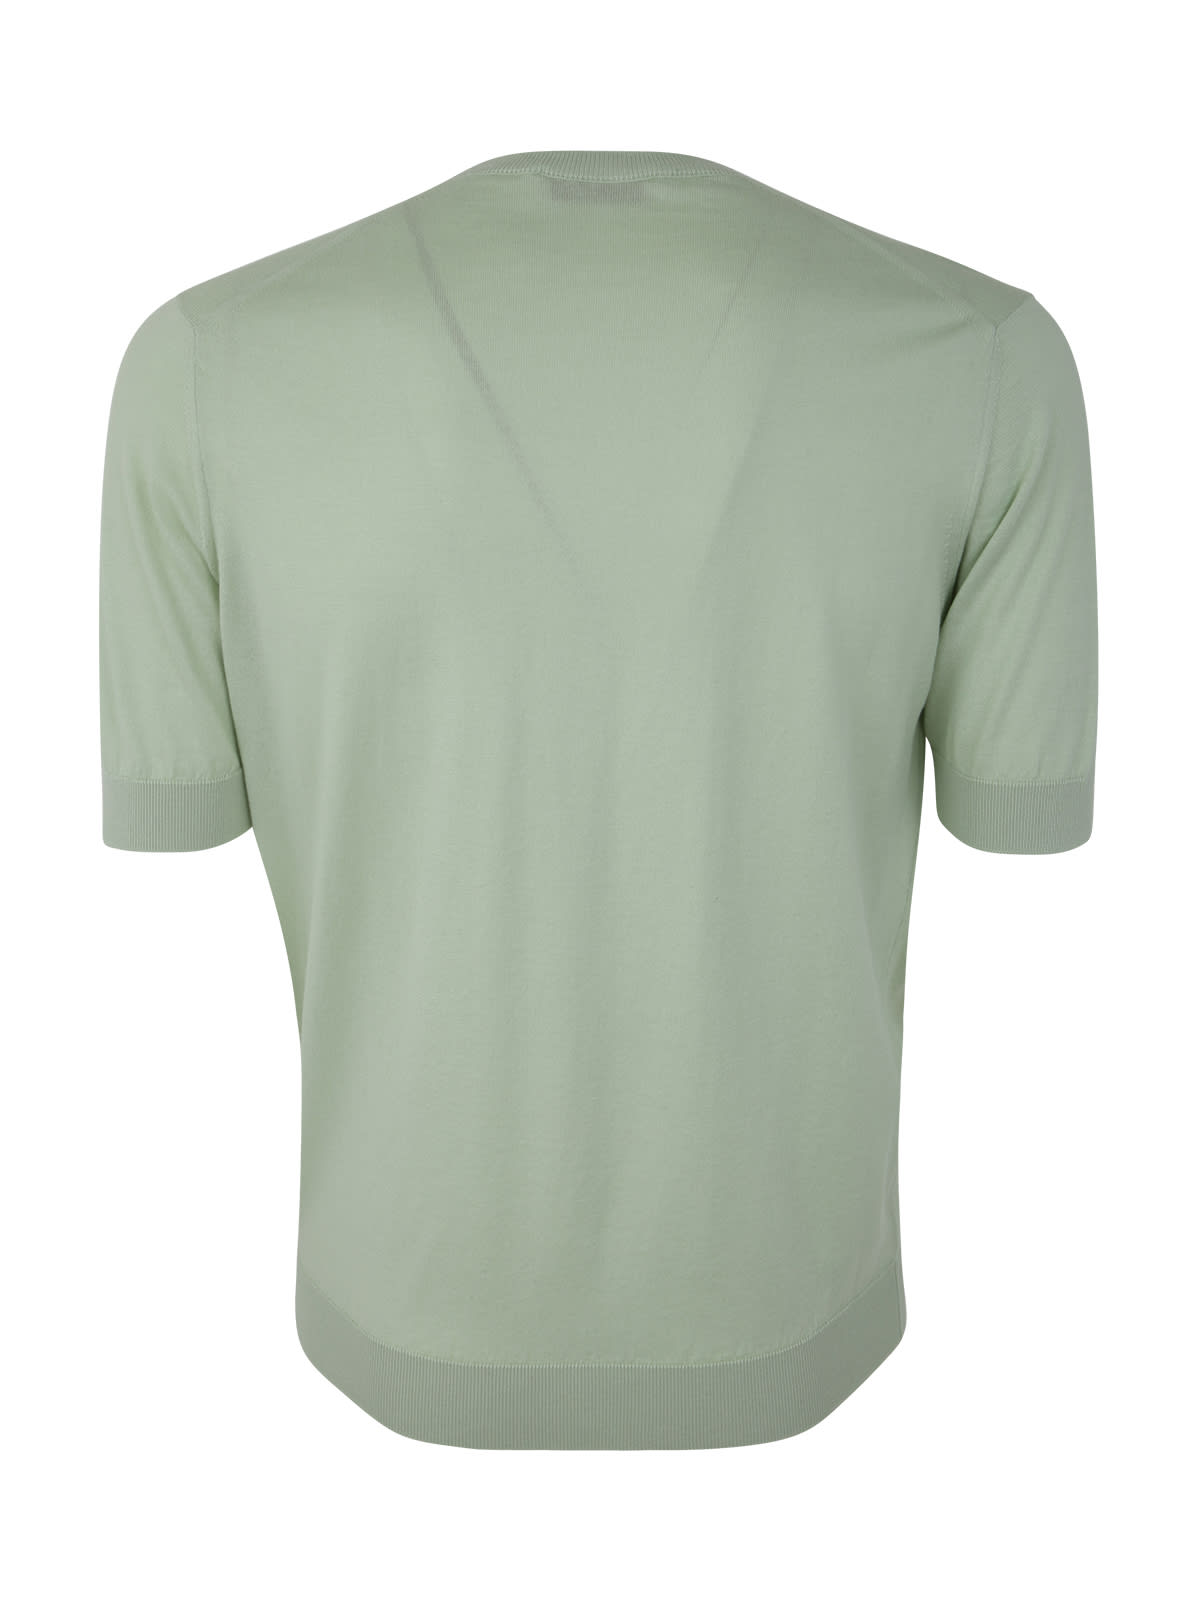 Shop Filippo De Laurentiis Round Neck T-shirt In Green